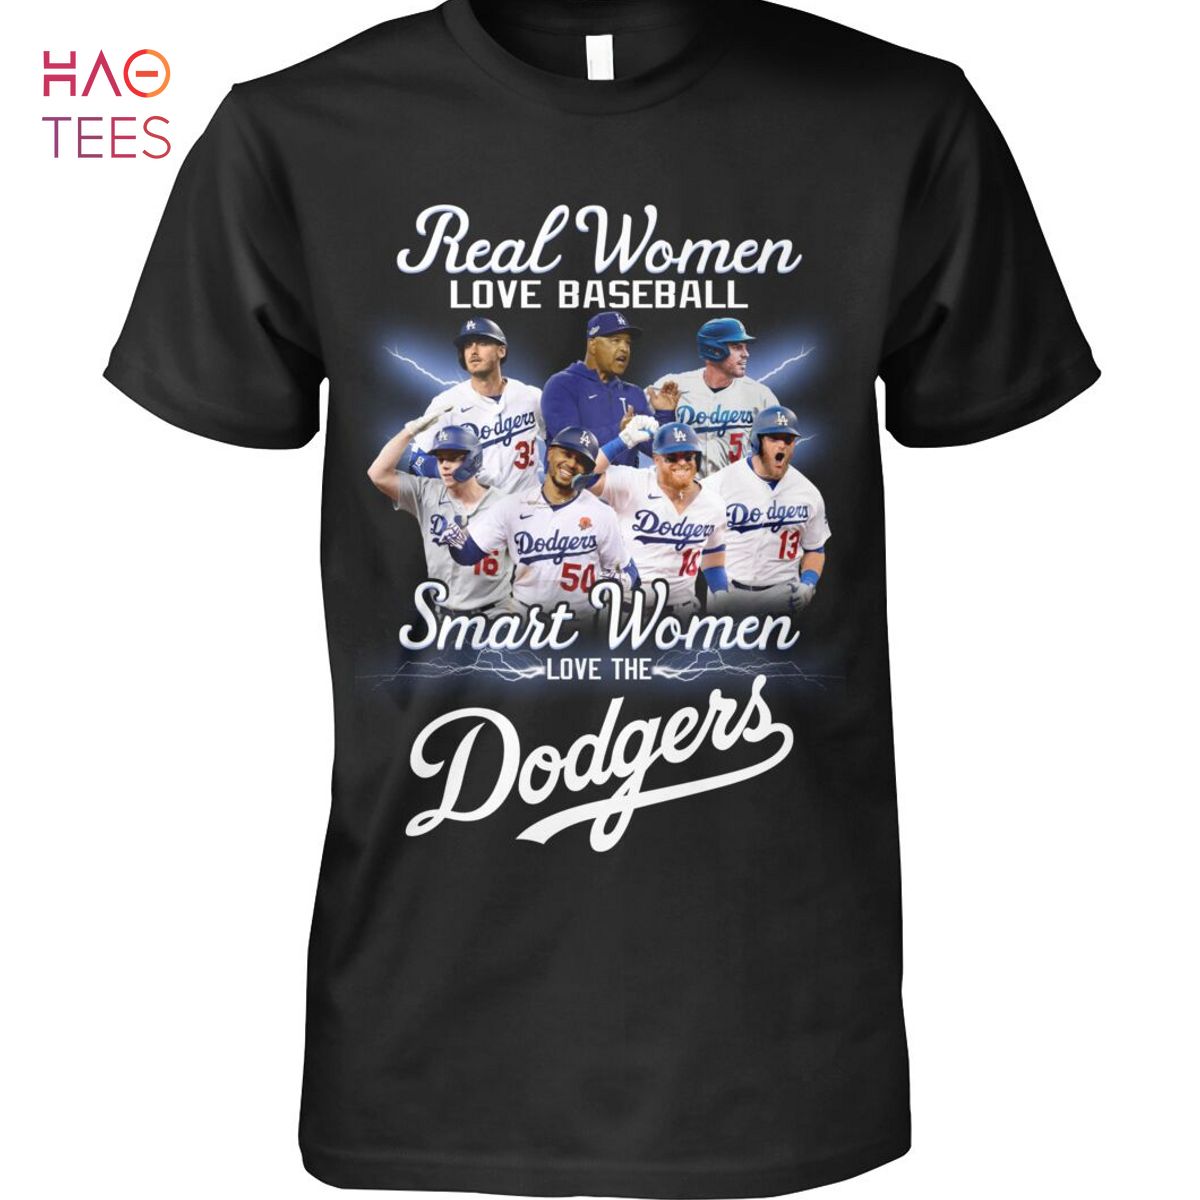 ladies dodger shirts